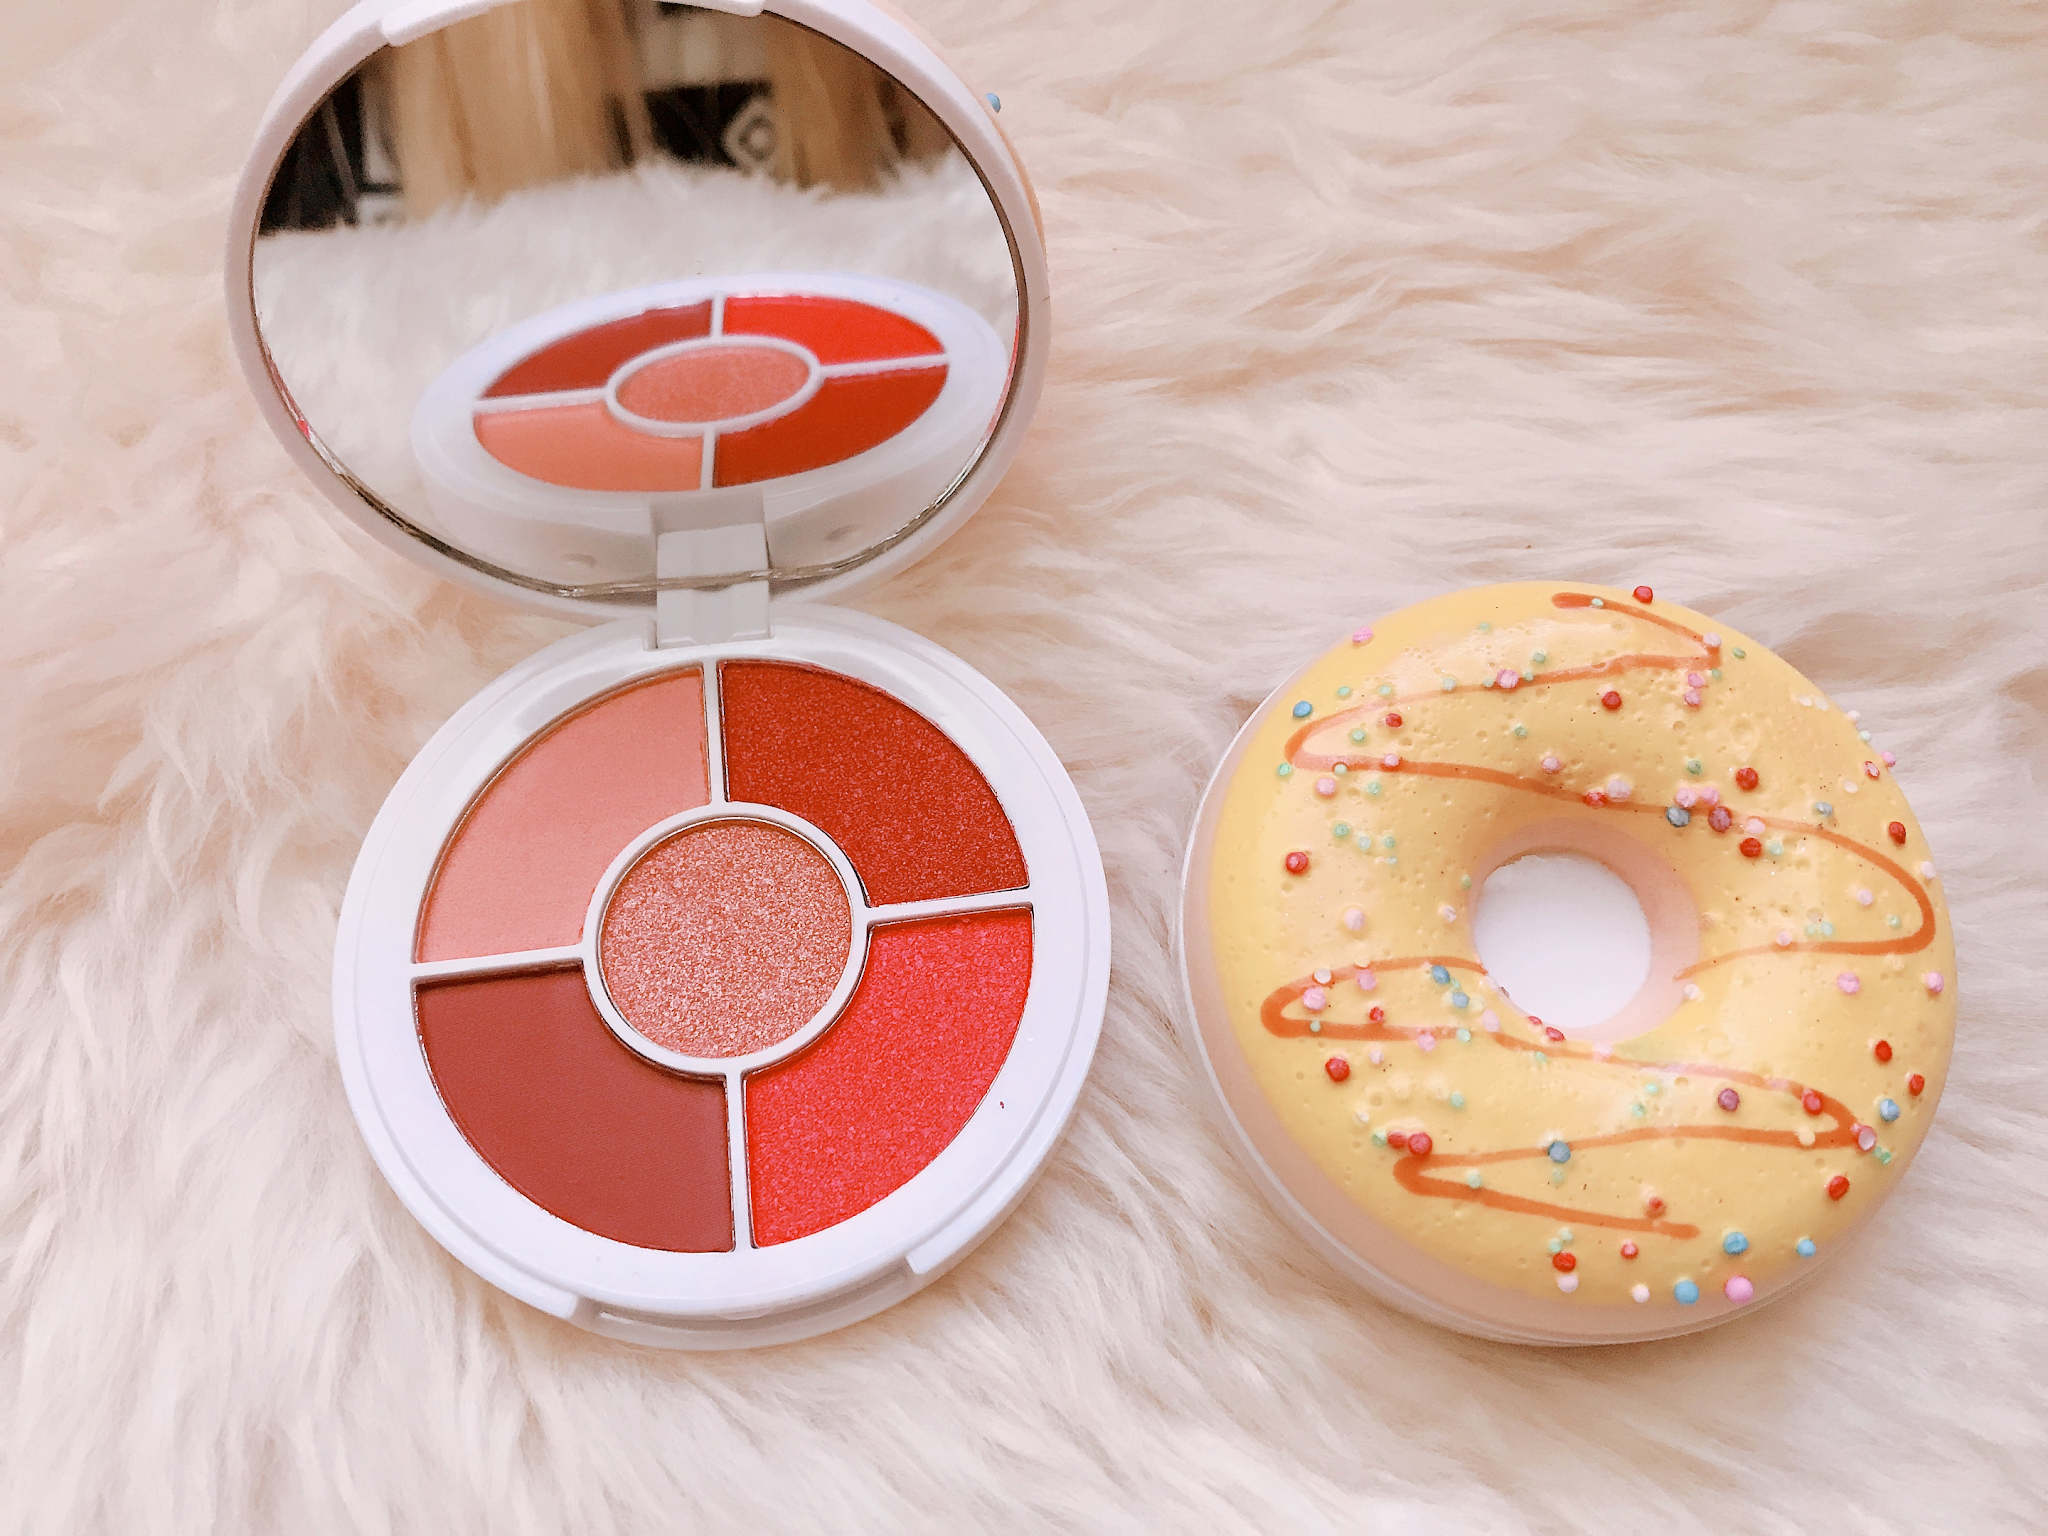 Maple Glazed Syrup & Strawberry Sprinkles Quint Eyeshadow Palette by I Heart Revolution $7